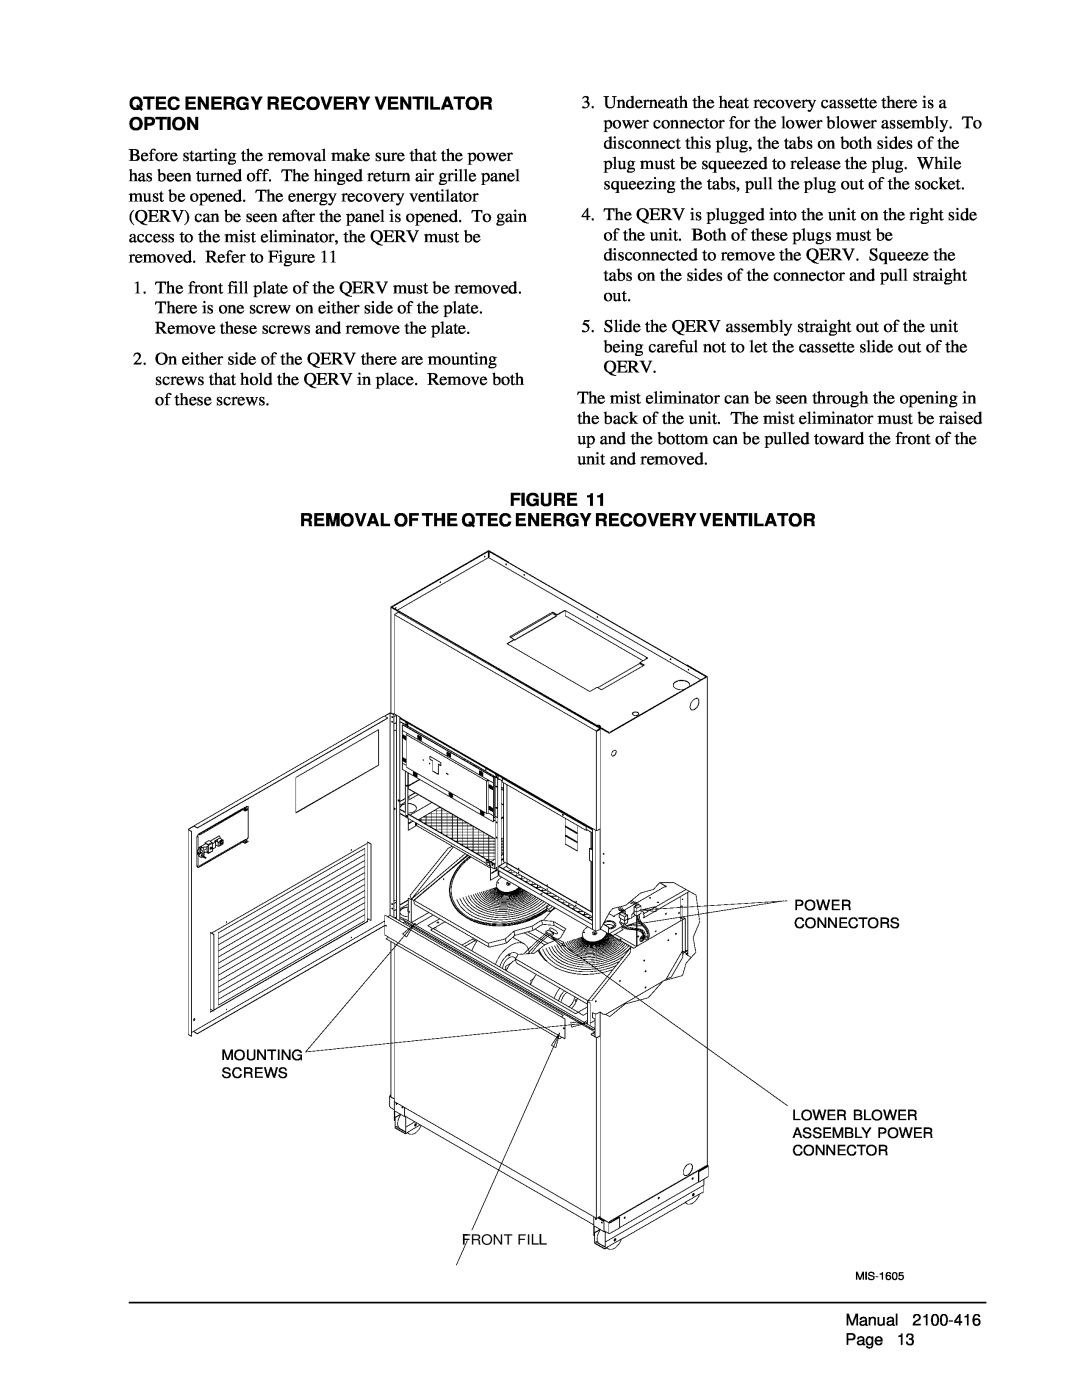 Bard QC501 installation instructions Qtec Energy Recovery Ventilator Option, Removal Of The Qtec Energy Recovery Ventilator 